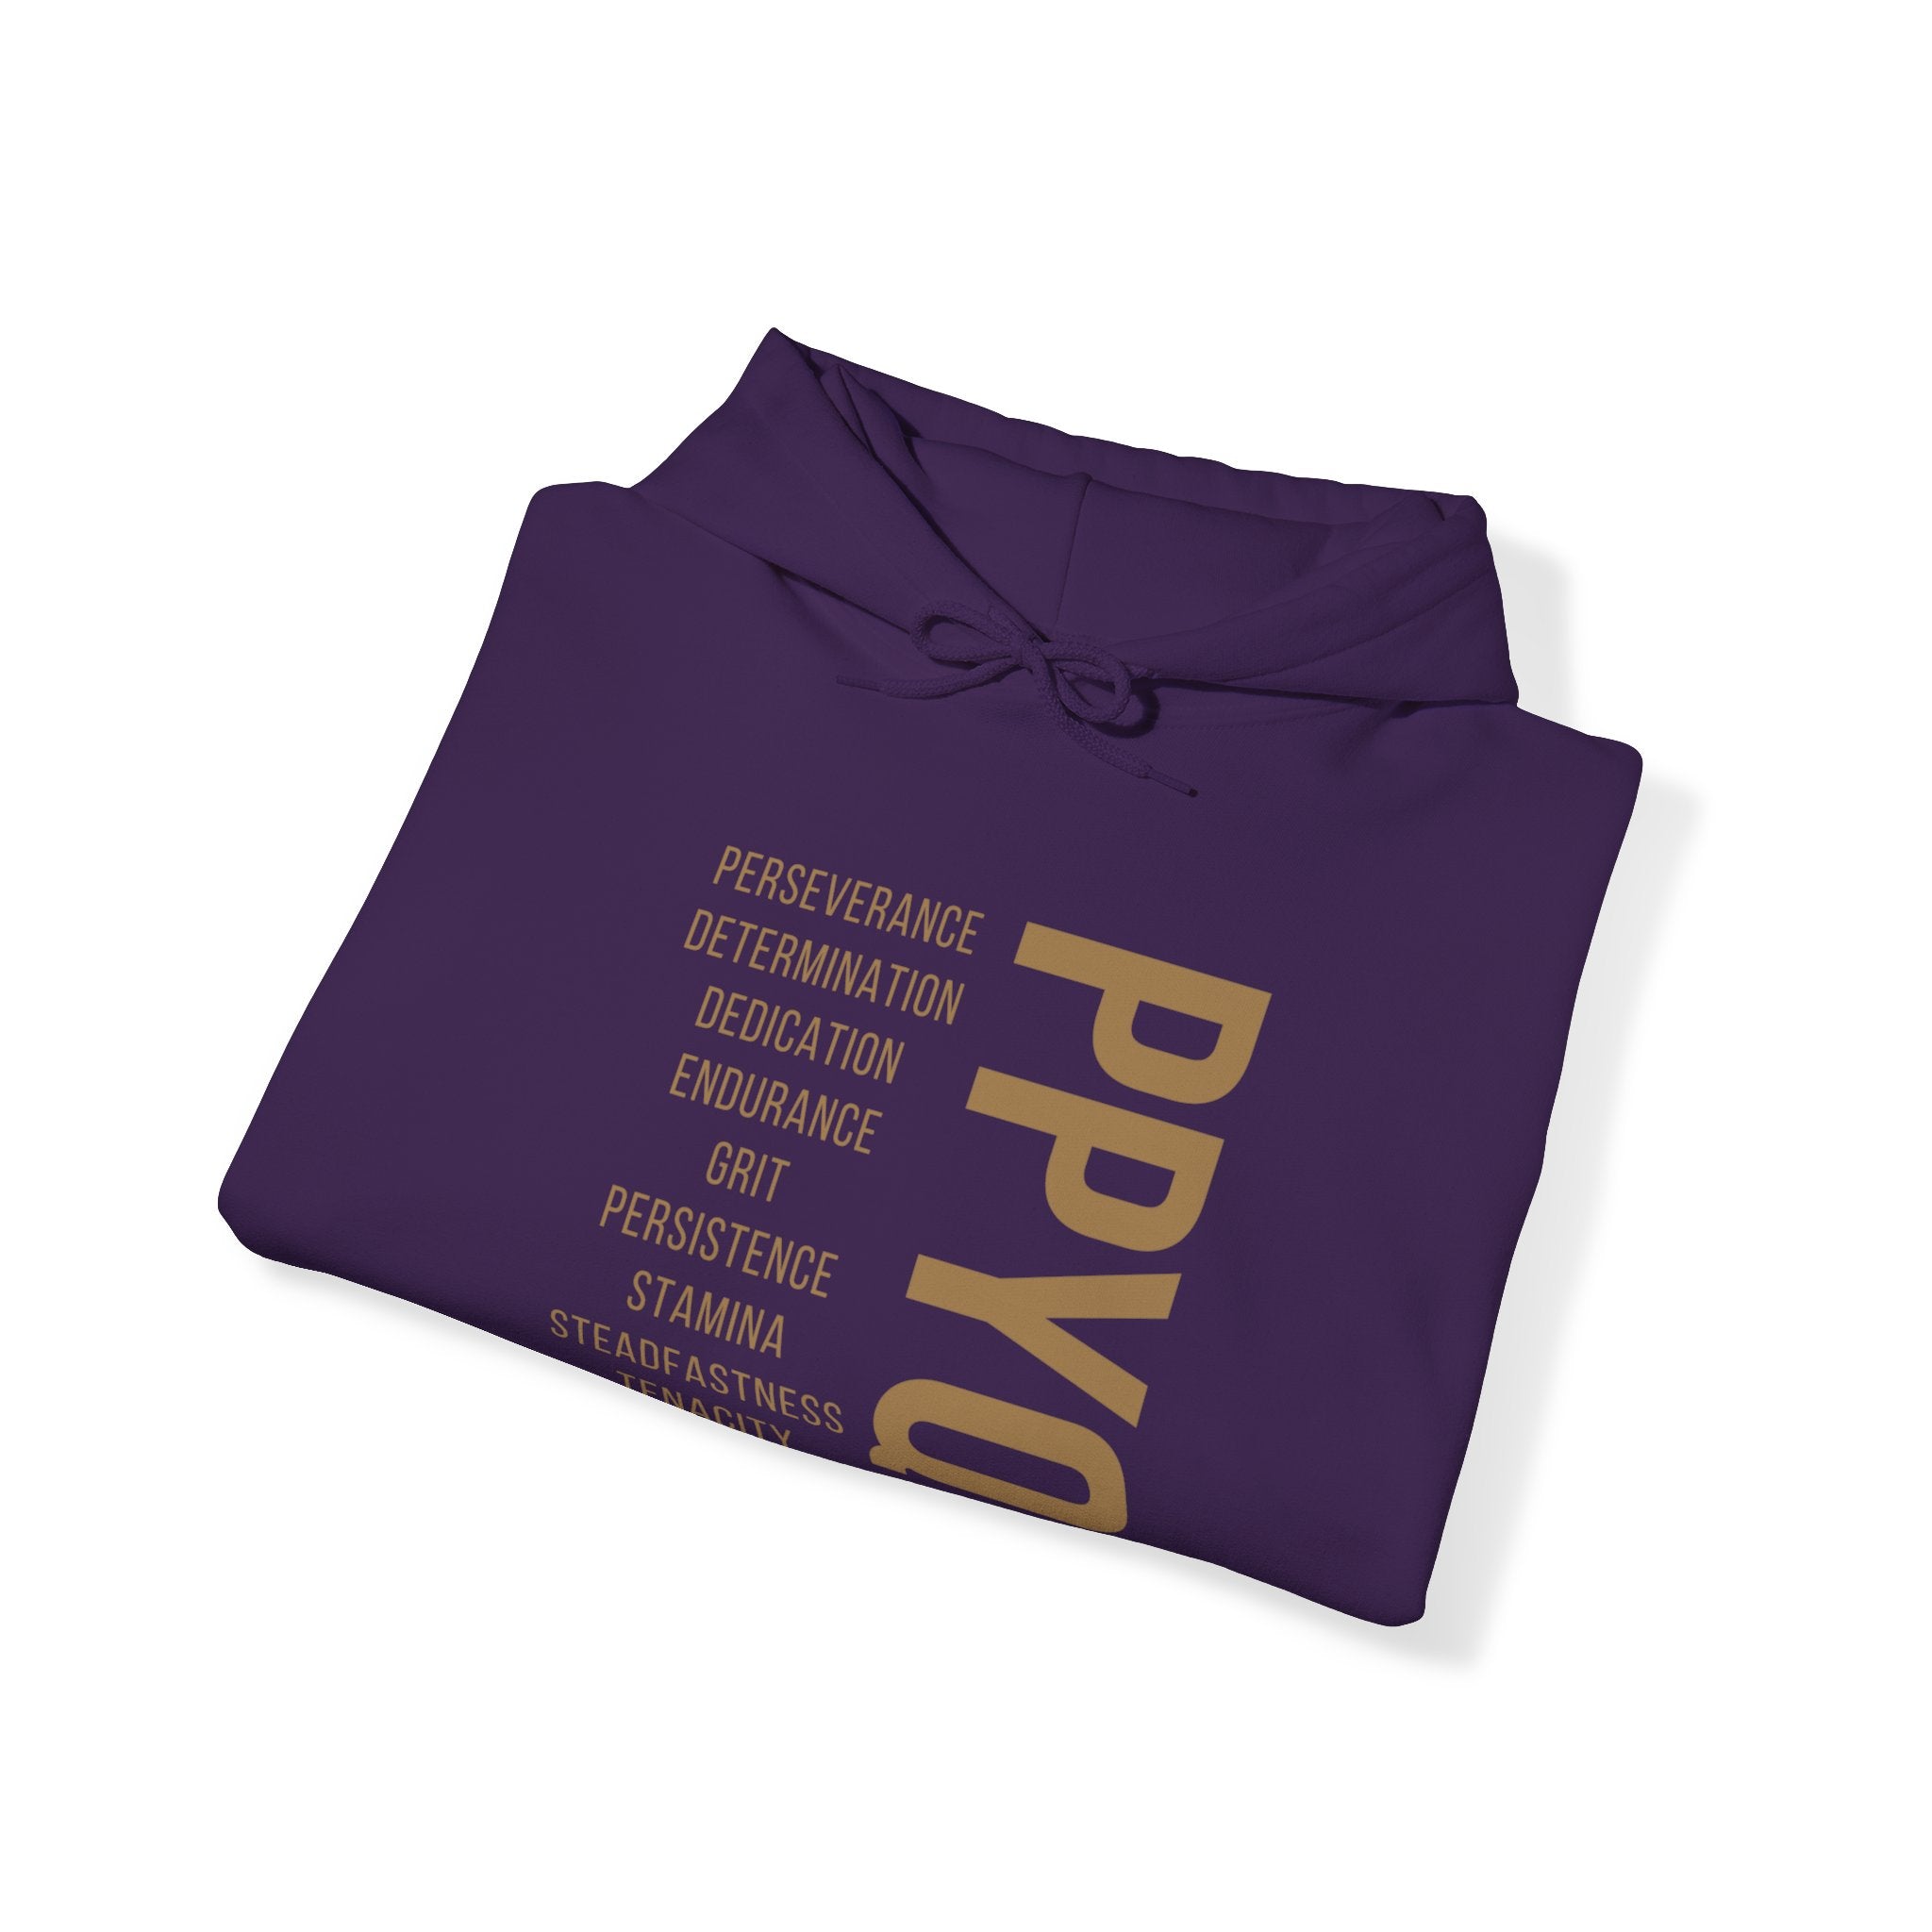 Purple PPYQ® Defined Hoodie